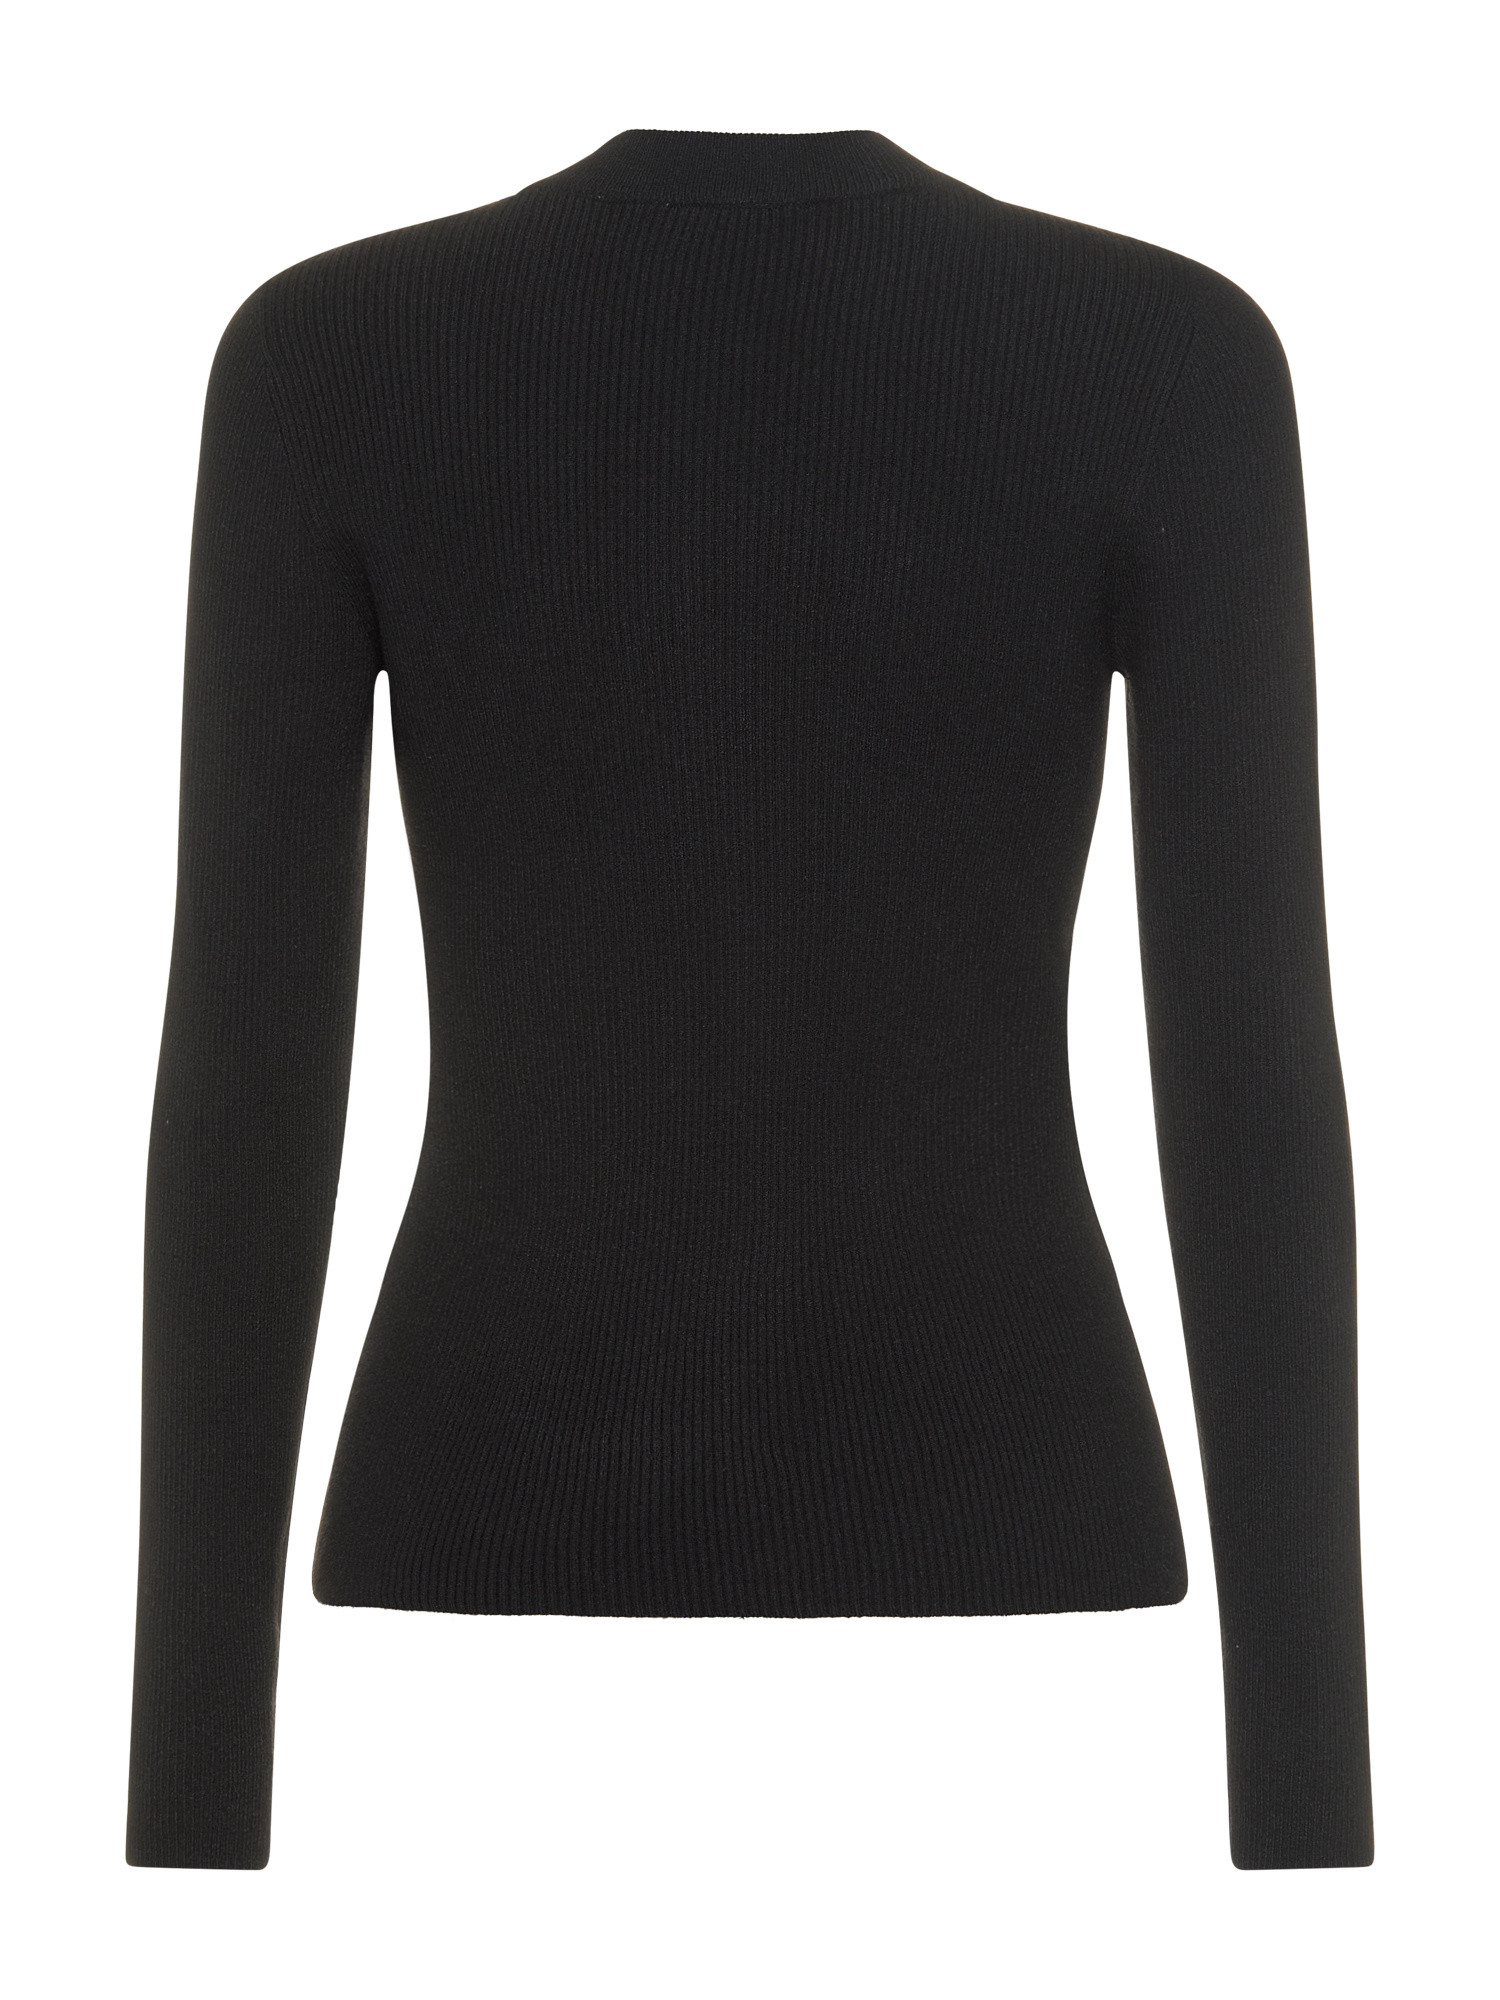 Levi's - Slim fit ribbed sweater, Black, large image number 1